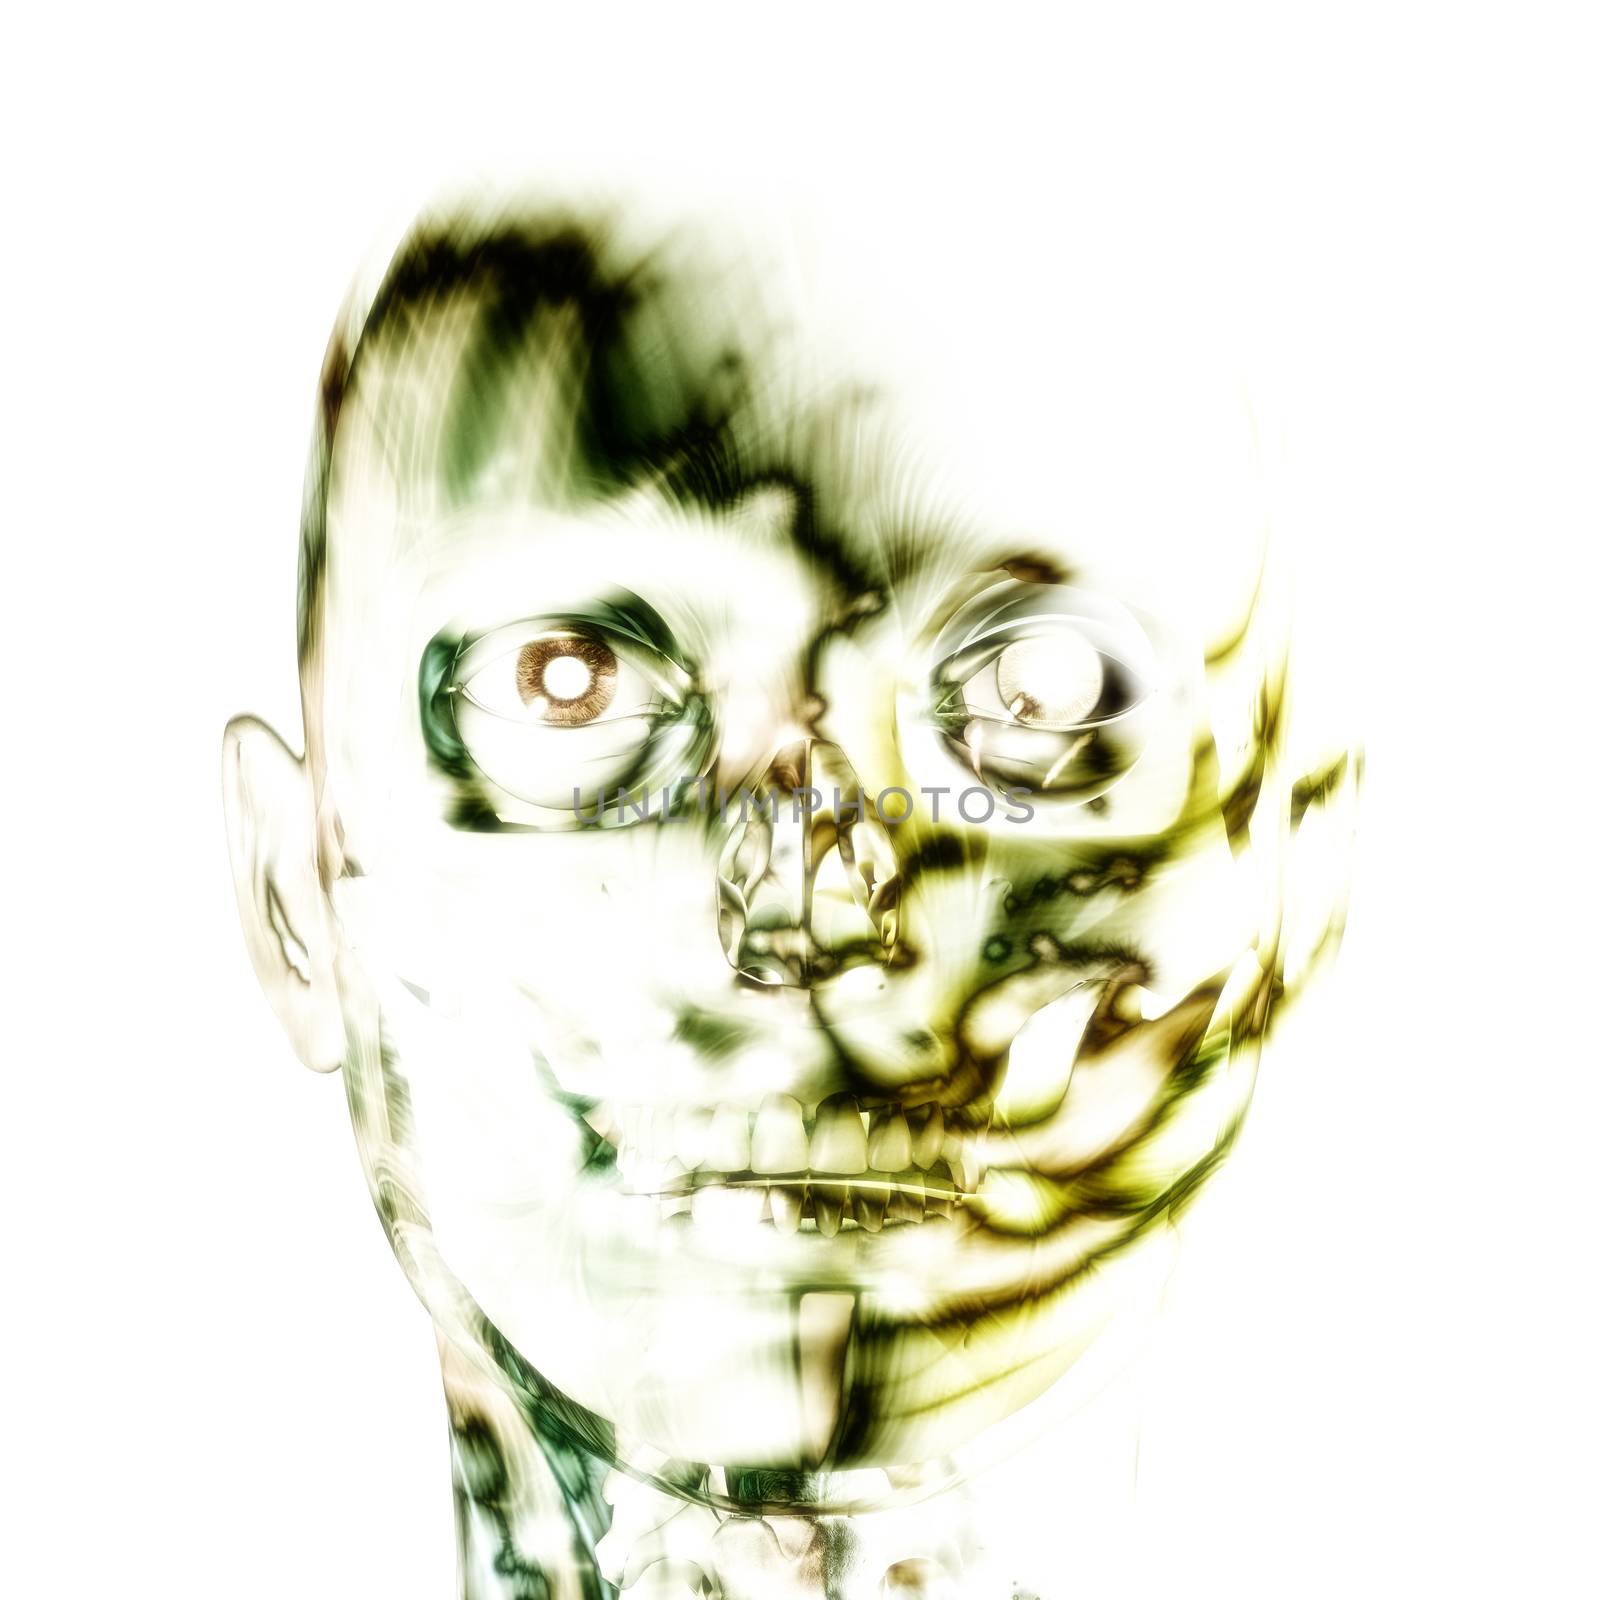 3D illustration, 3d Rendering of a human Skull by 3quarks